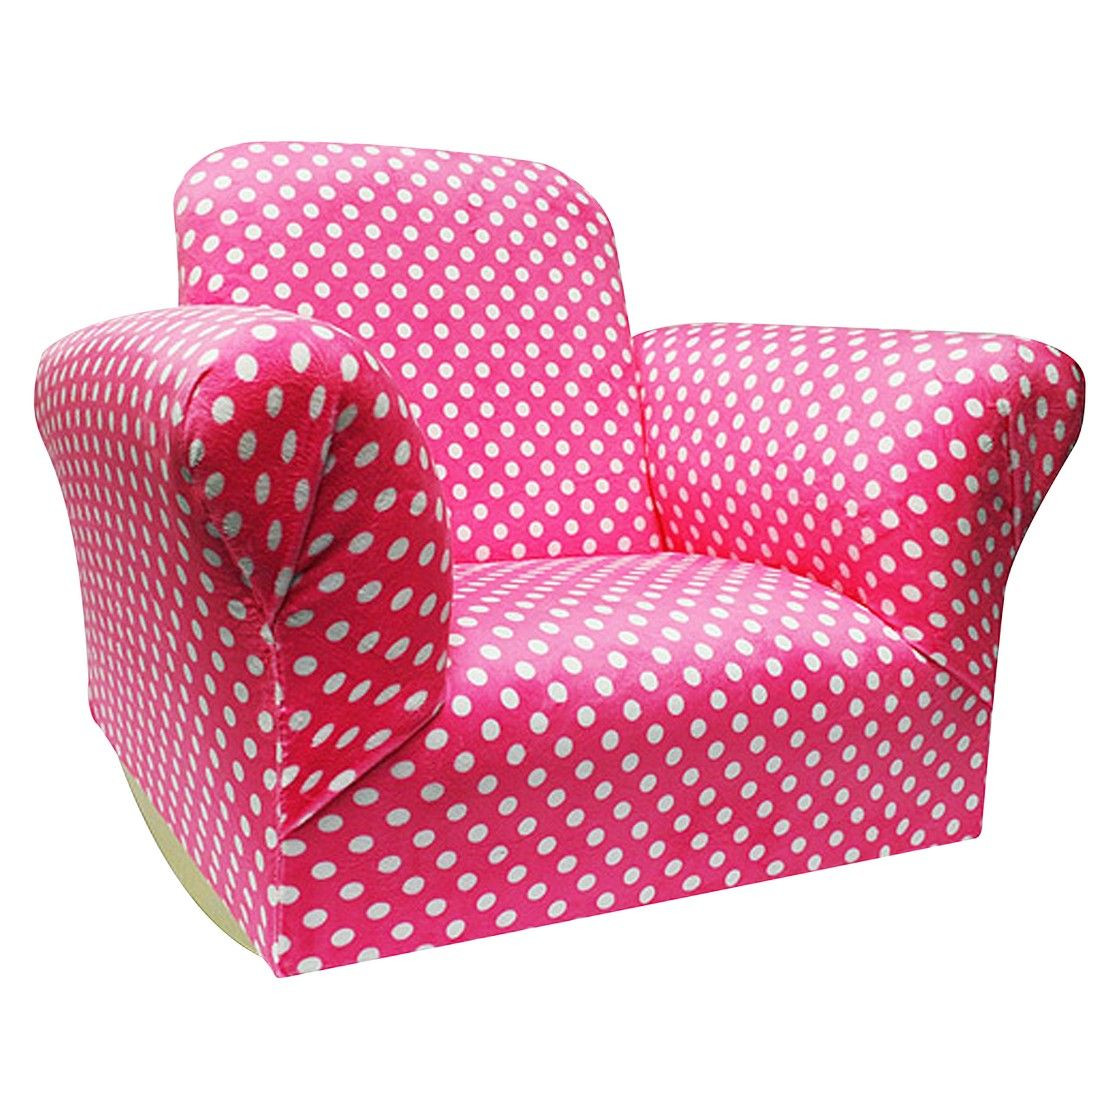 Kids Upholstered Rocking Chair
 Komfy Kings Hot Pink Upholstered Kids Rocker Chair